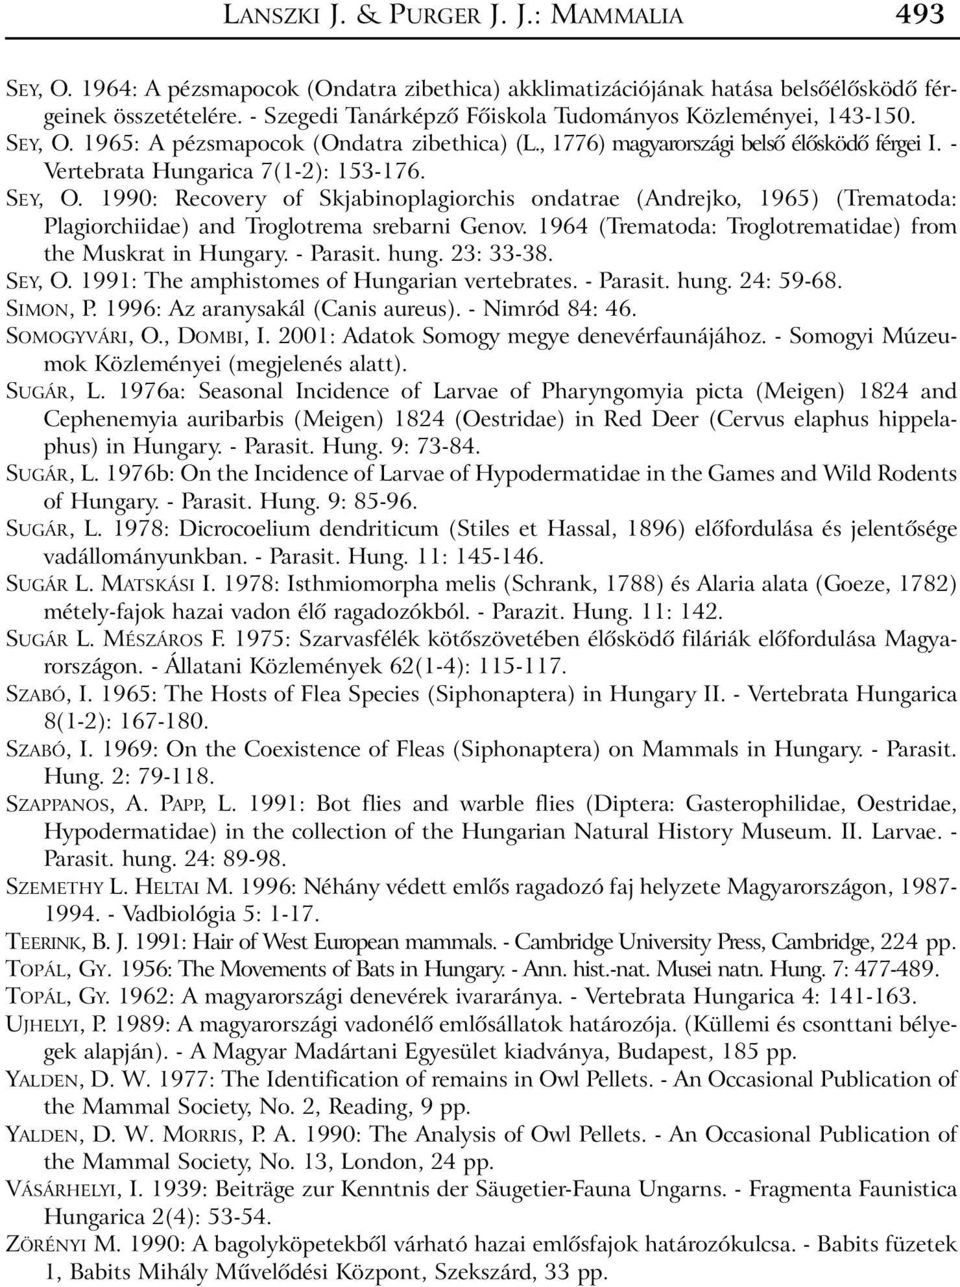 SEY, O. 1990: Recovery of Skjabinoplagiorchis ondatrae (Andrejko, 1965) (Trematoda: Plagiorchiidae) and Troglotrema srebarni Genov. 1964 (Trematoda: Troglotrematidae) from the Muskrat in Hungary.